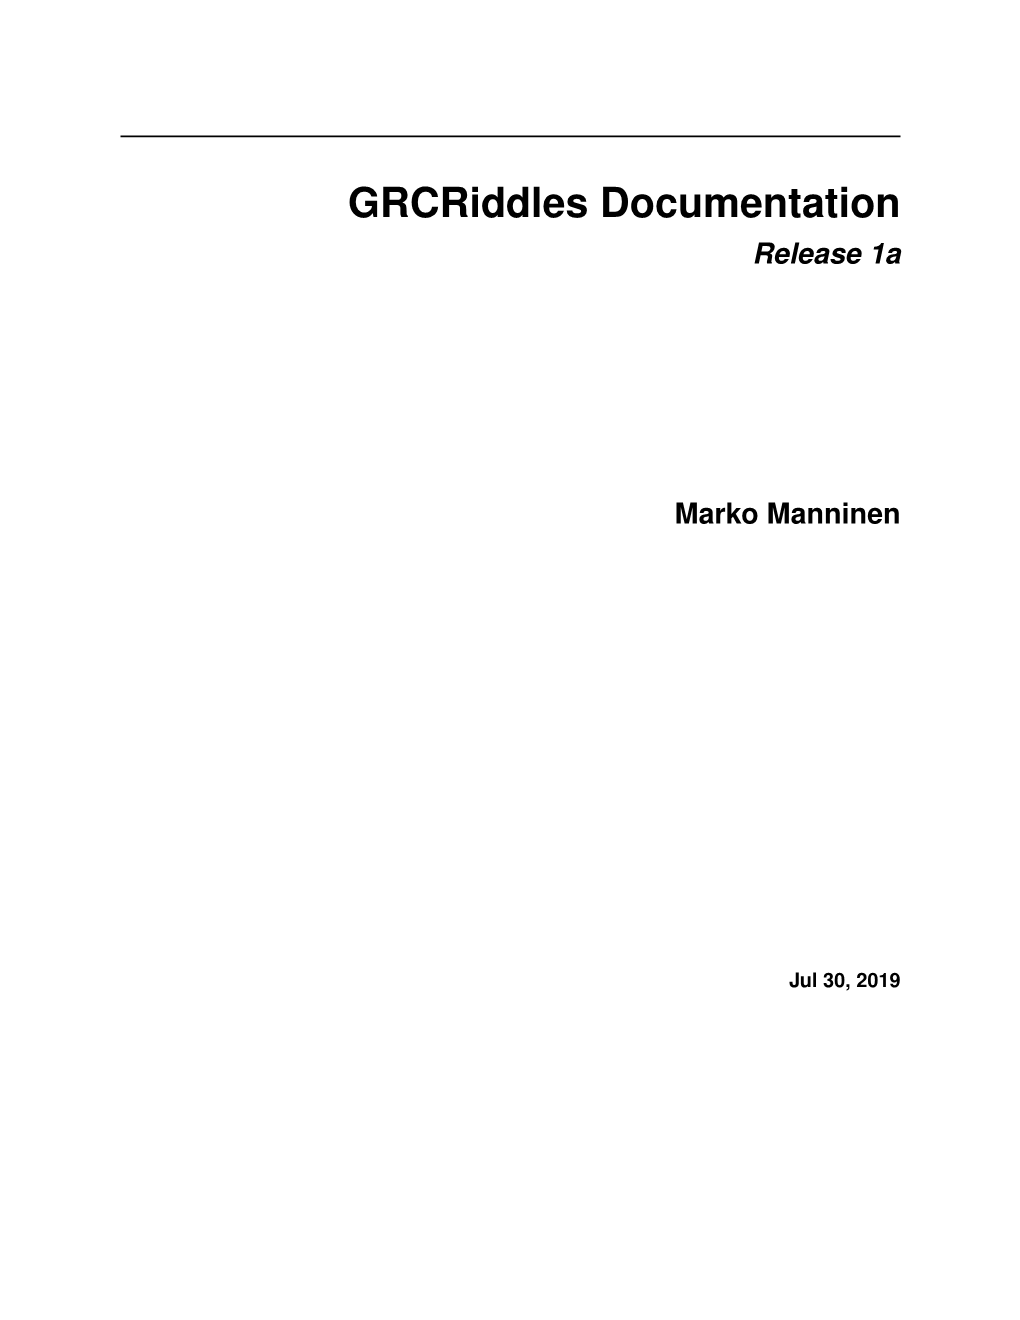 Grcriddles Documentation Release 1A